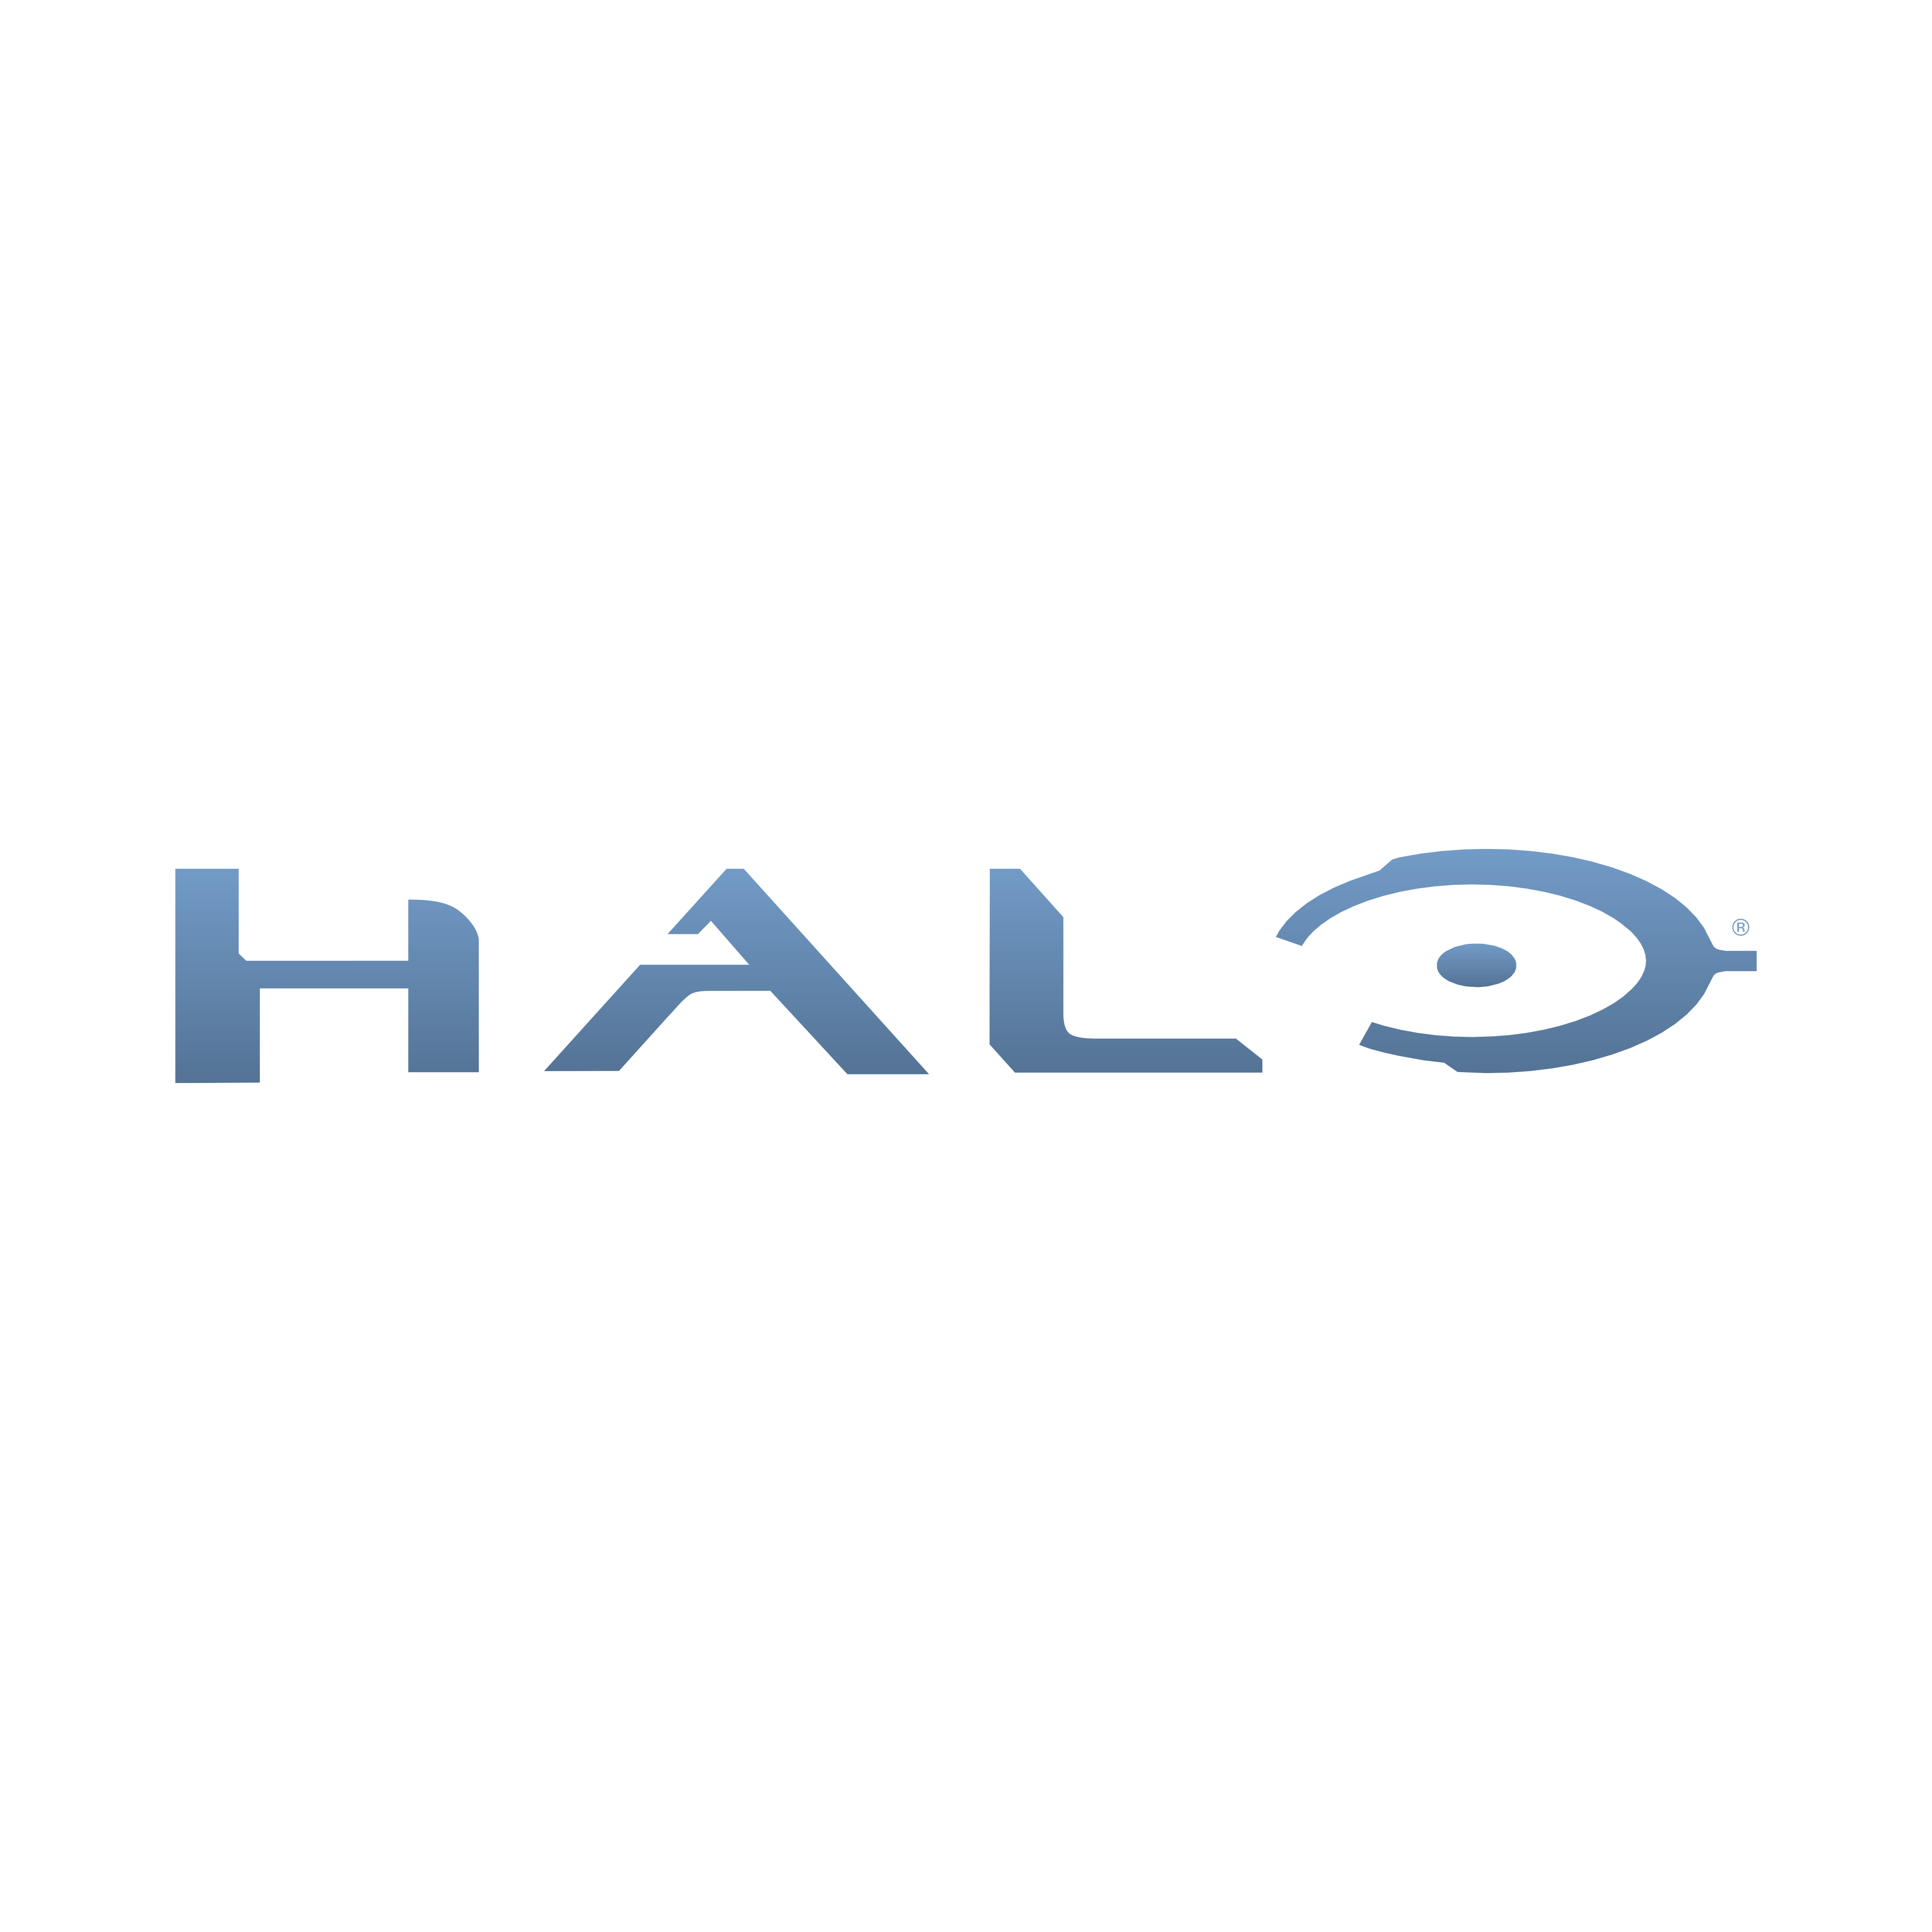 halo logo 0 - Halo Logo